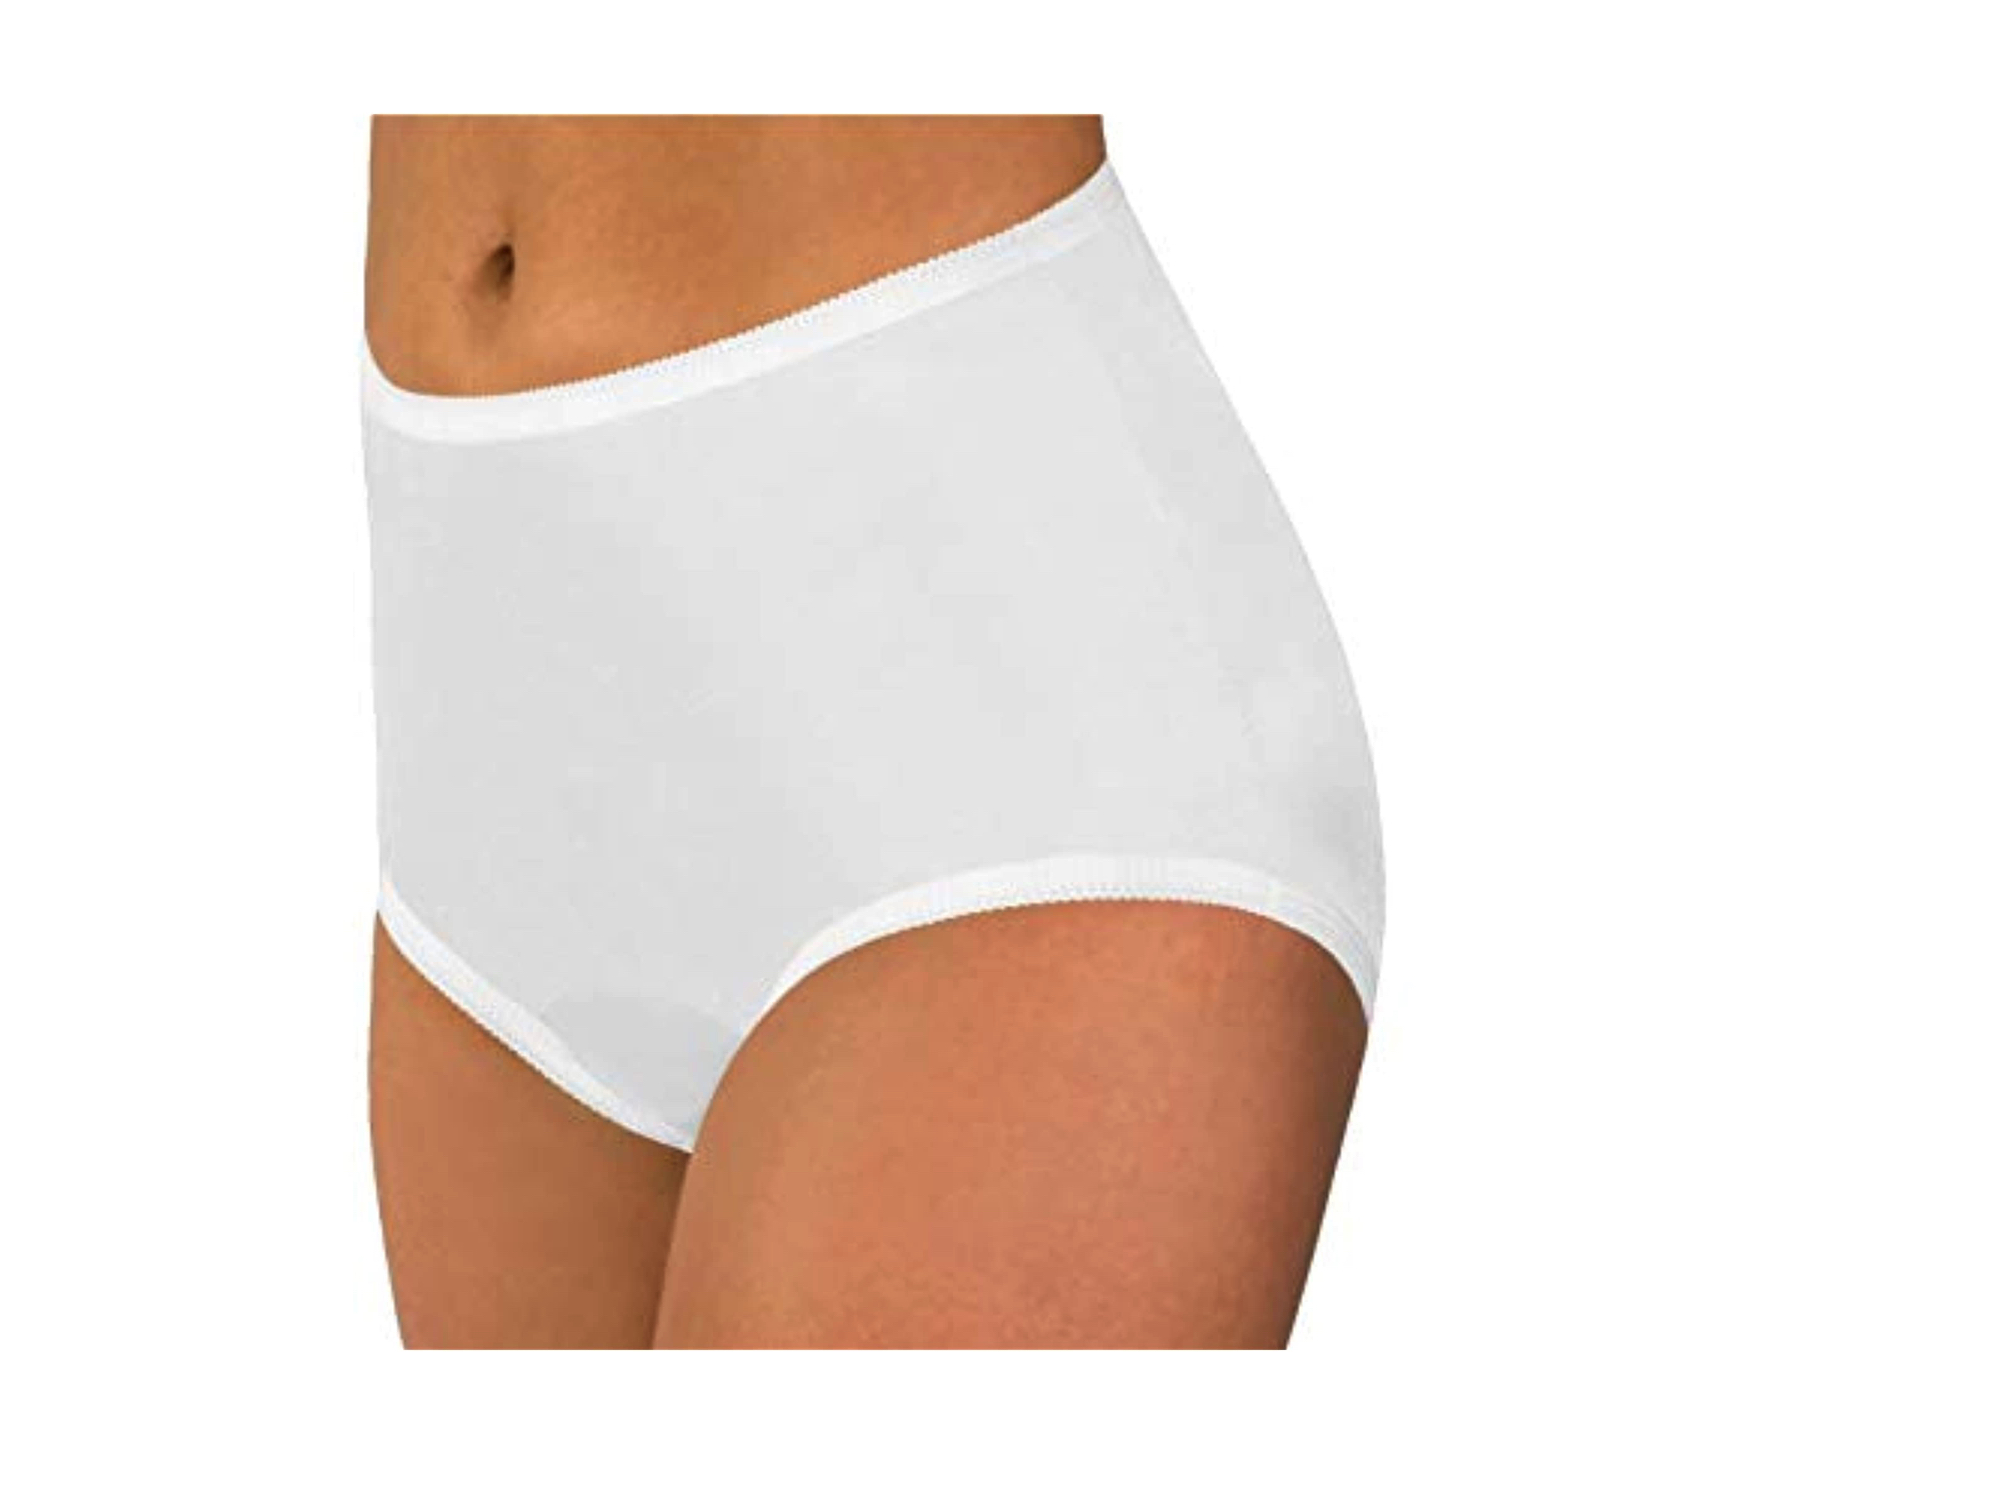 Women's Underwear Classic Nylon Panties Full Cut Carole Briefs, 3-Pack - image 1 of 2